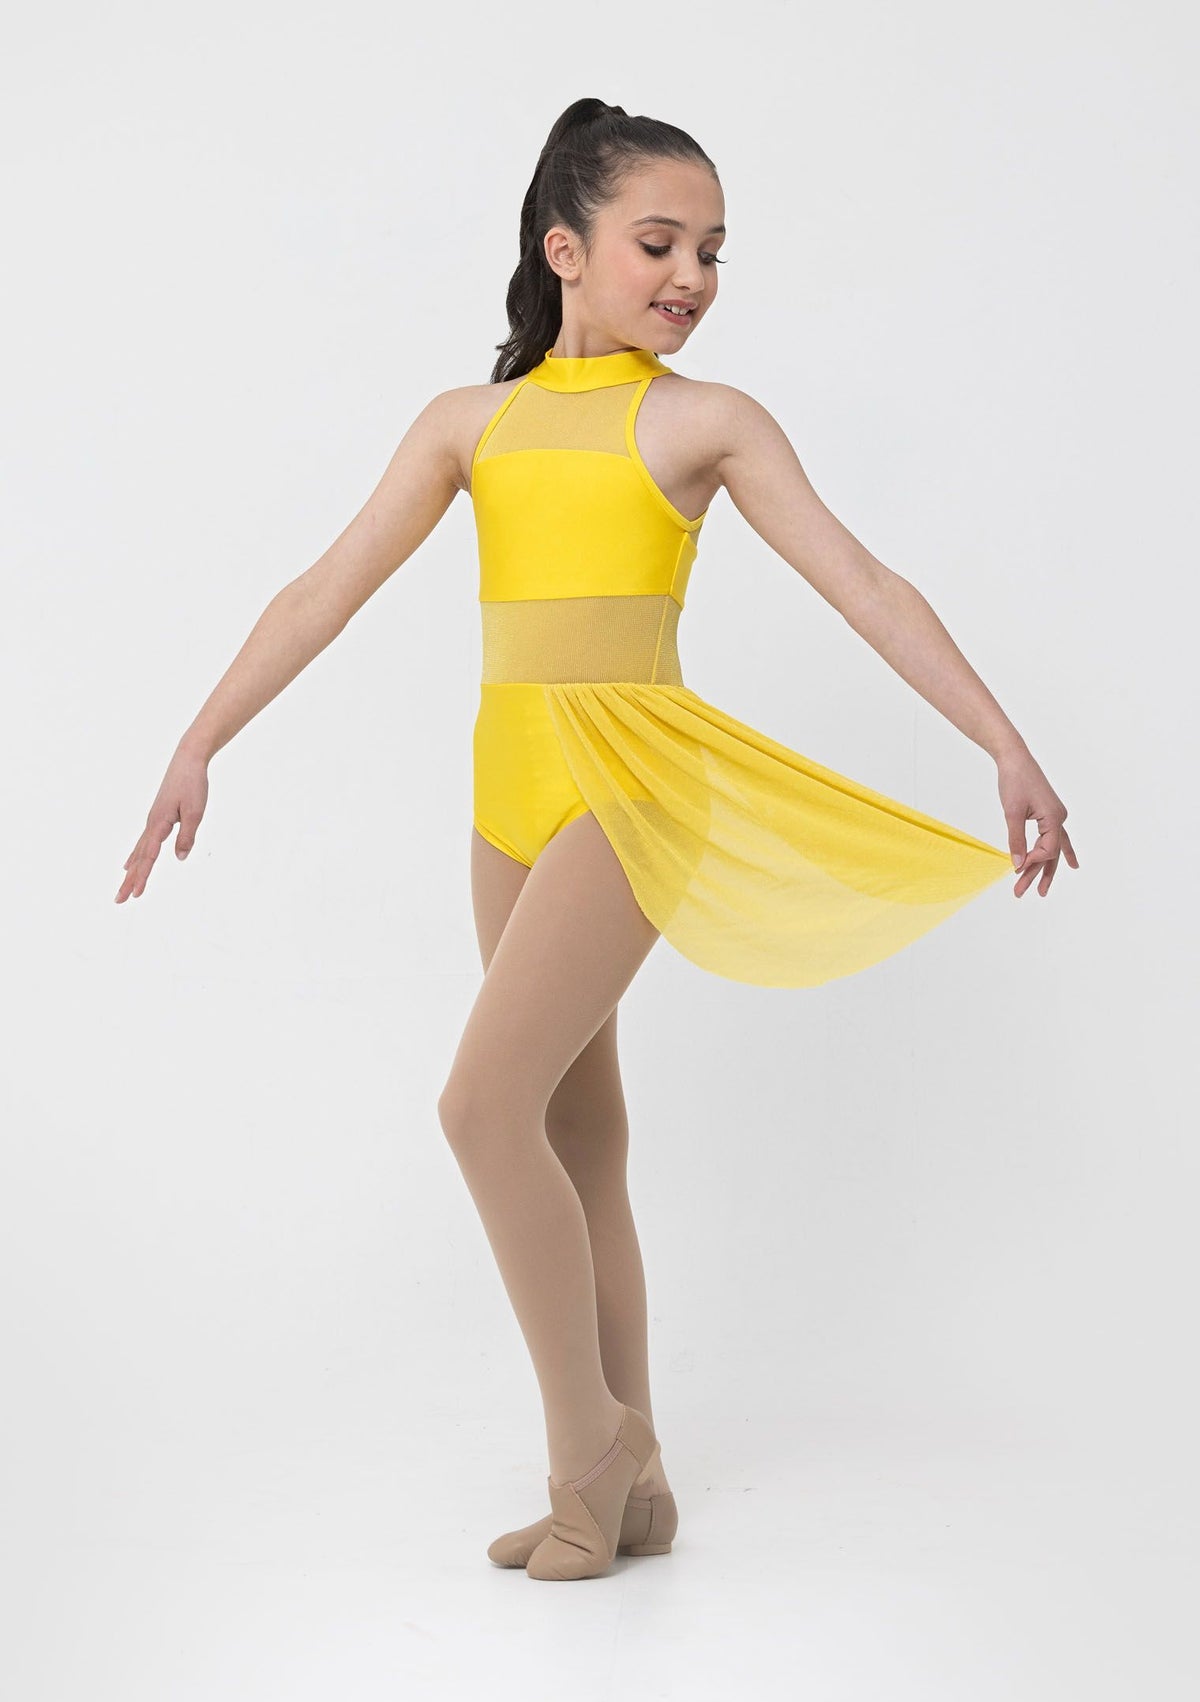 Gia-Mia Dance Women's Footed Tight Jazz Ballet Costume Performance Team